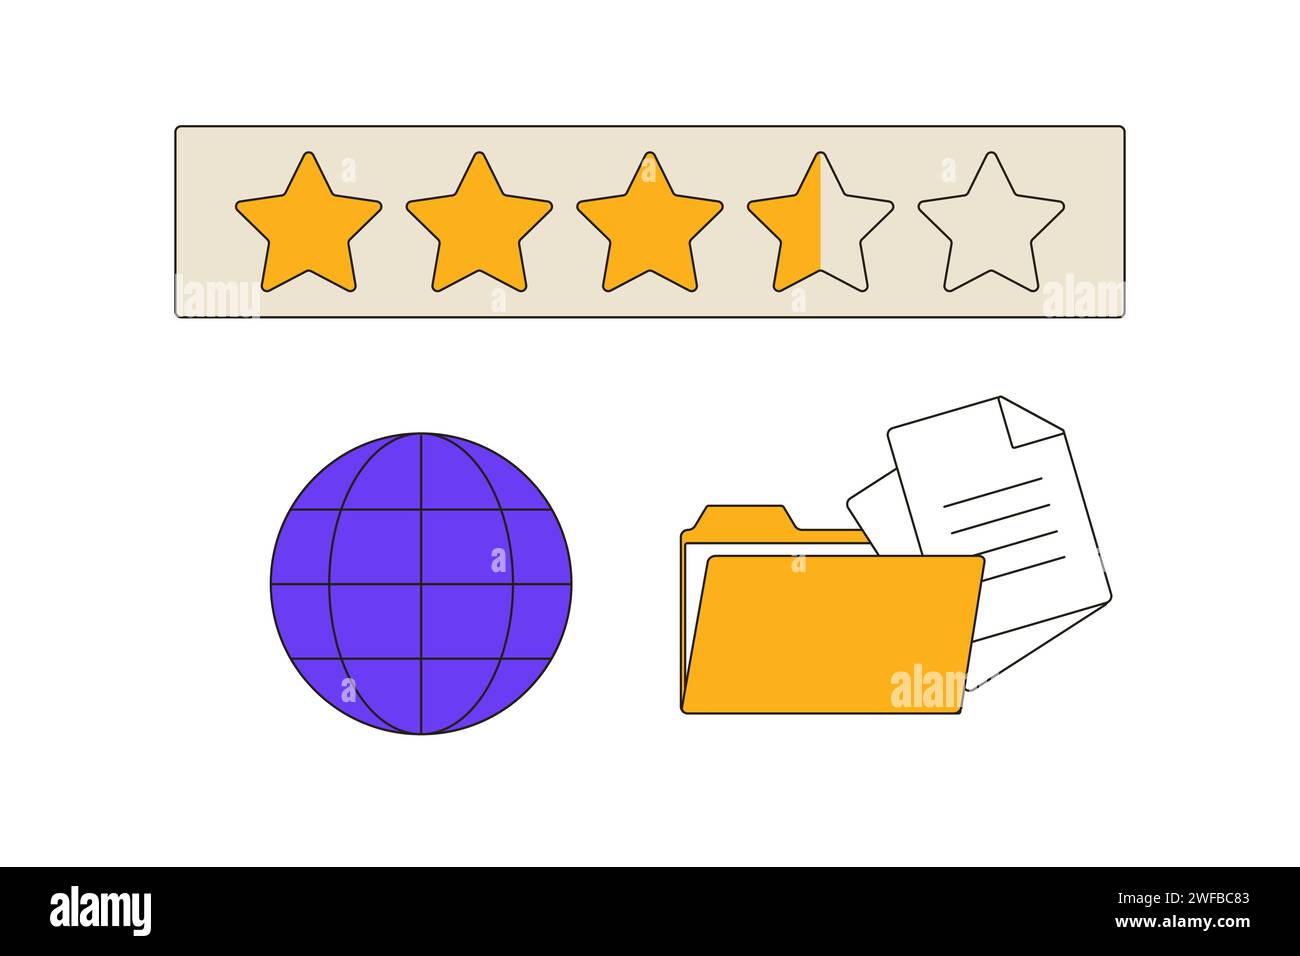 star rating, internet, document folder, neobrutalism, y2k interface, retro groovy  vector Stock Vector